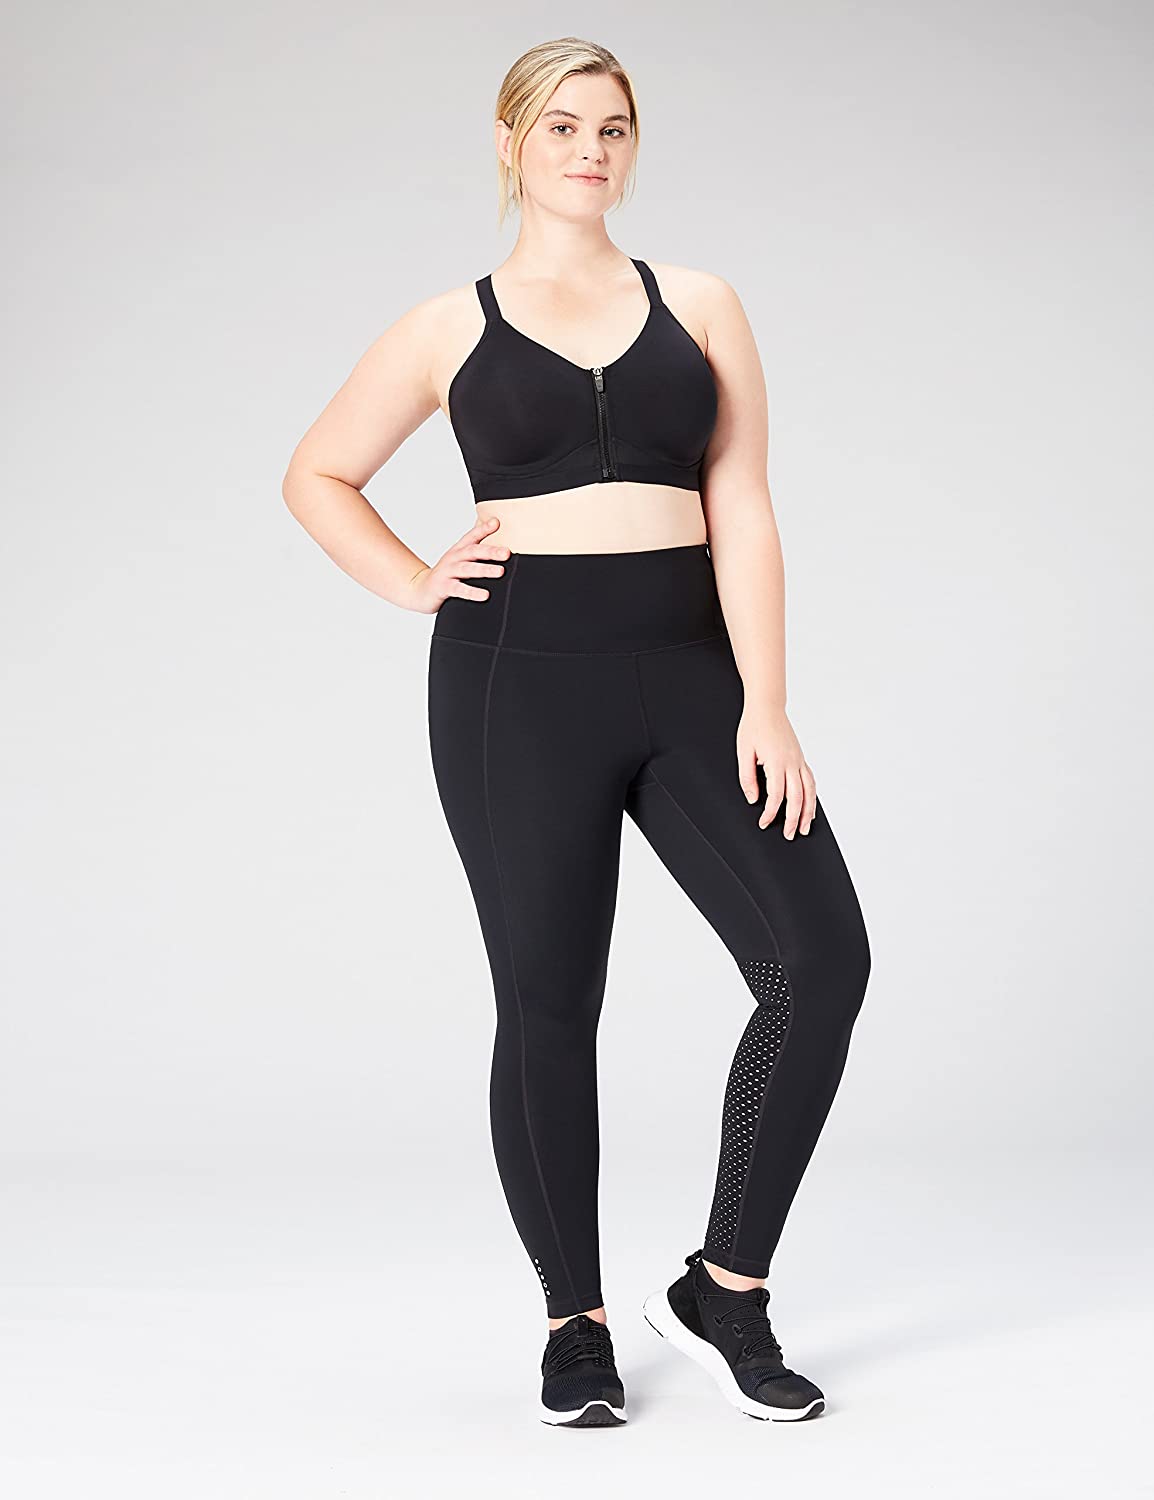 Brand - Core 10 Women's Medium Support Cross Back, Black, Size 32G | eBay